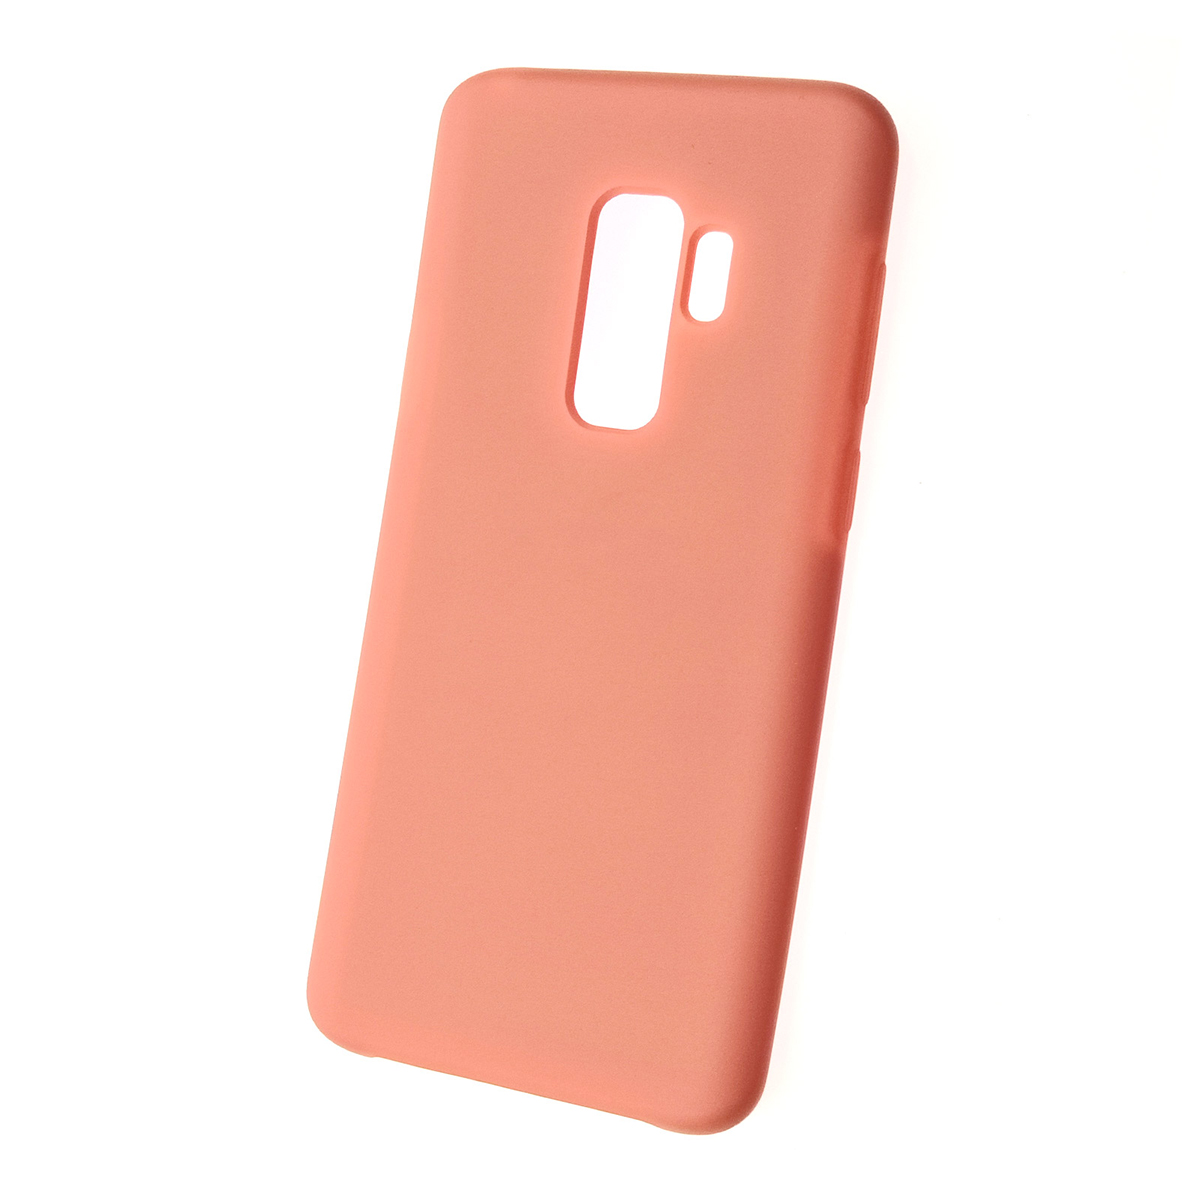 Чехол накладка Silicon Cover для SAMSUNG Galaxy S9 Plus (SM-G965), силикон, бархат, цвет розовый.